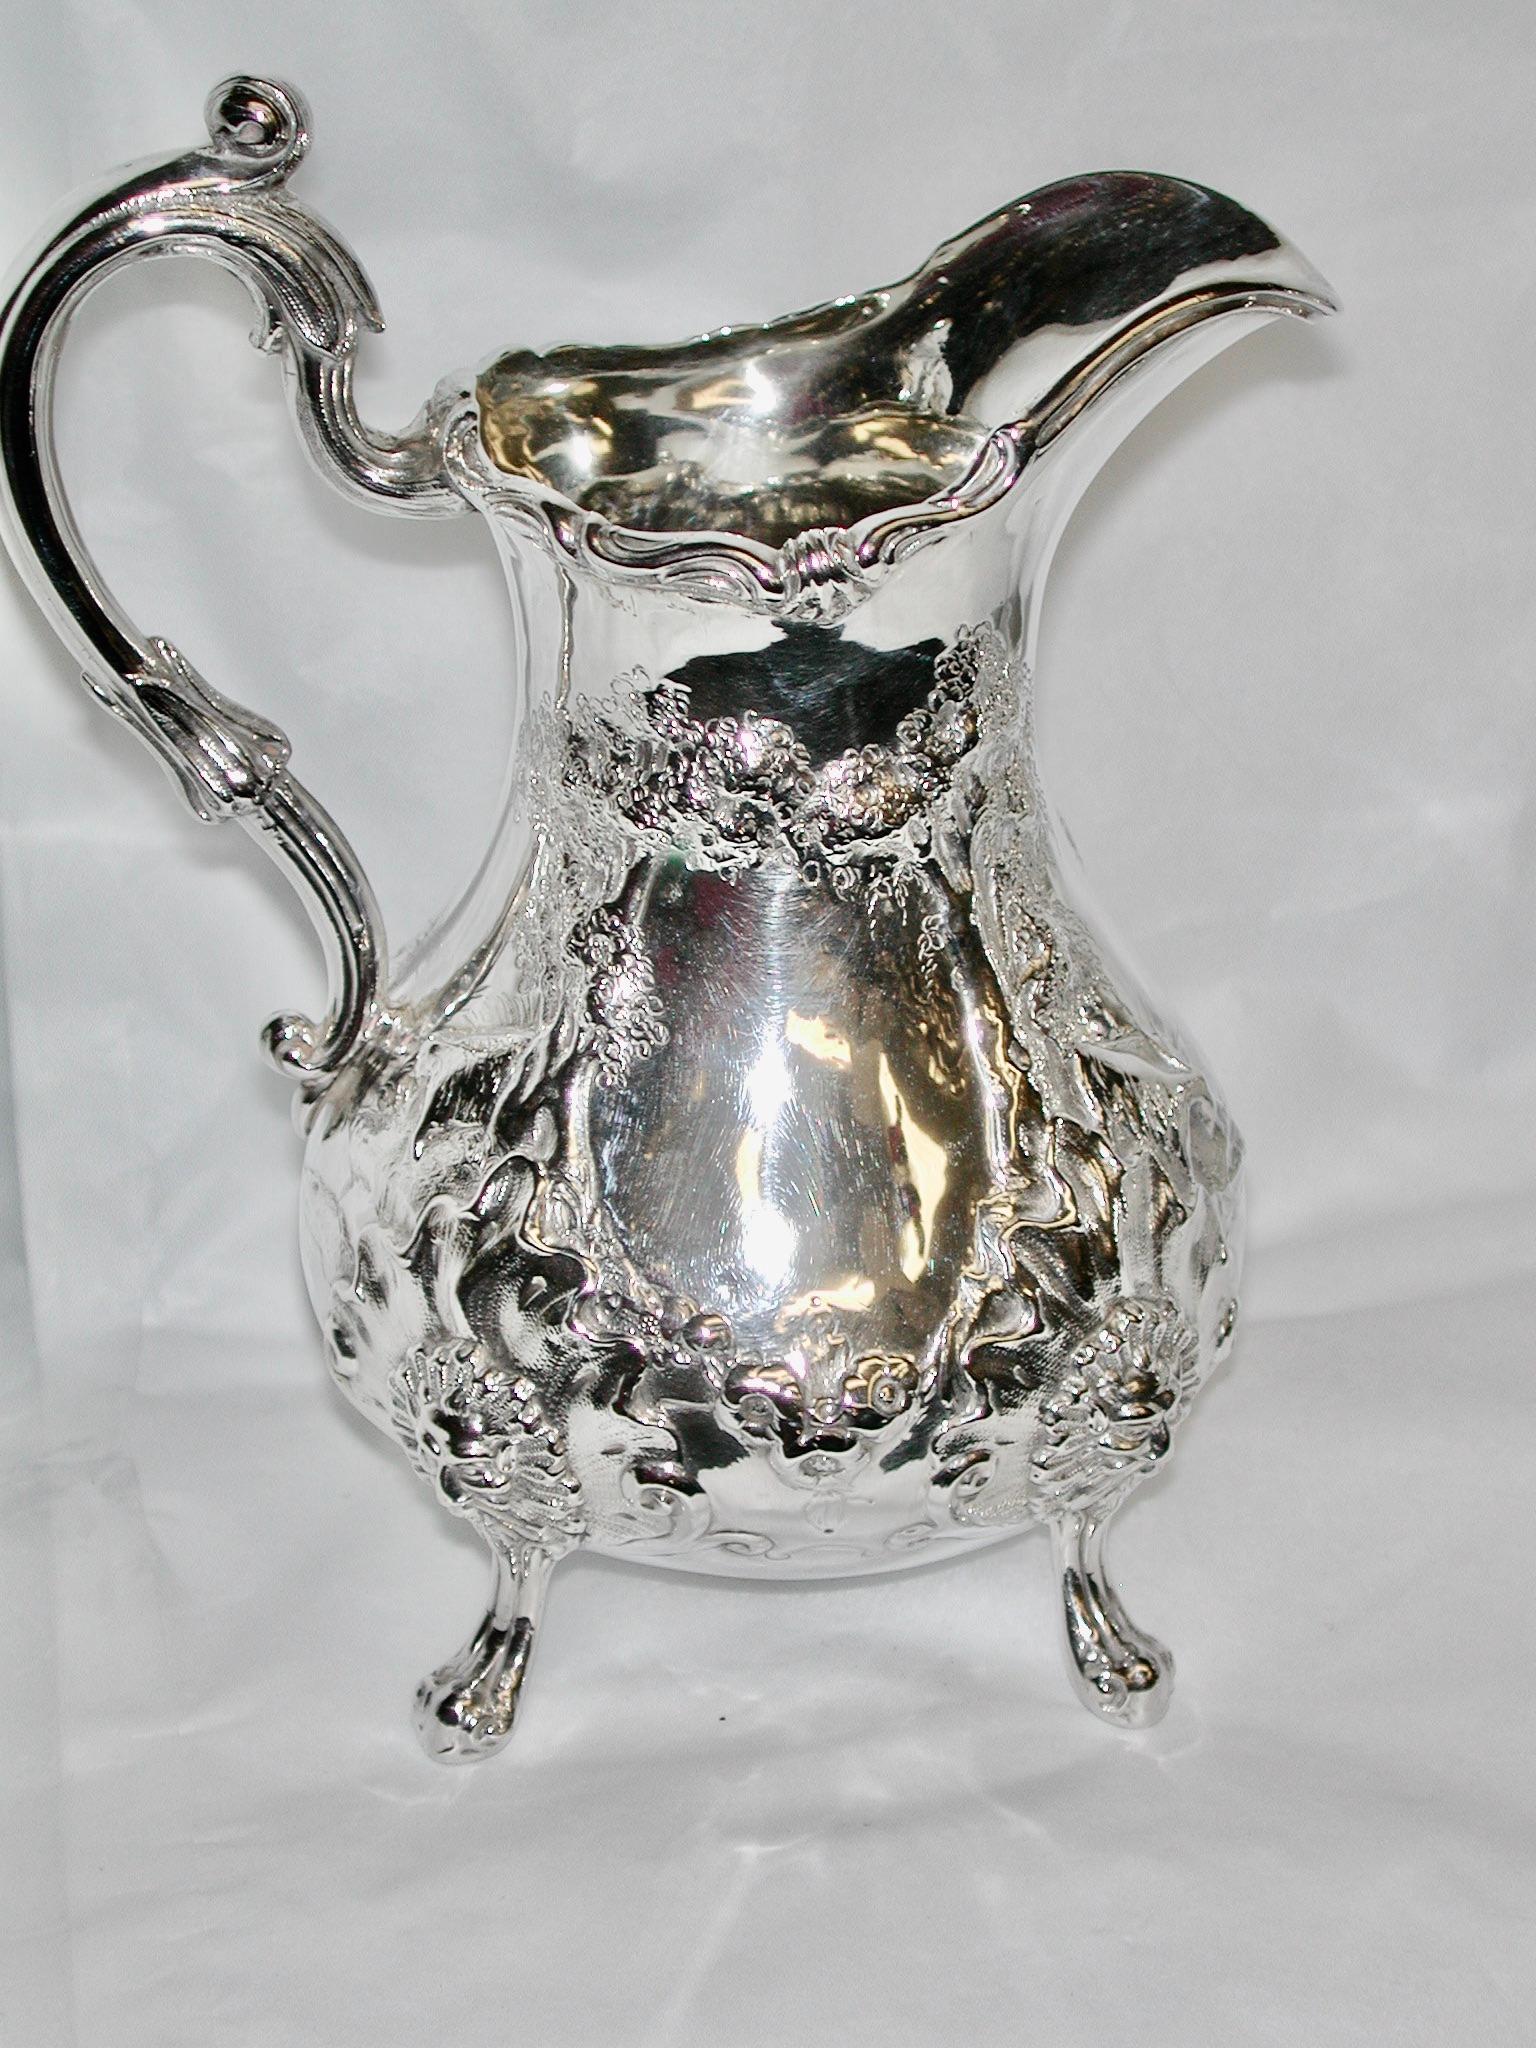 4 Piece Scenic Victorian Silver Tea & Coffee Set Robert Harper 1862/63 London For Sale 6